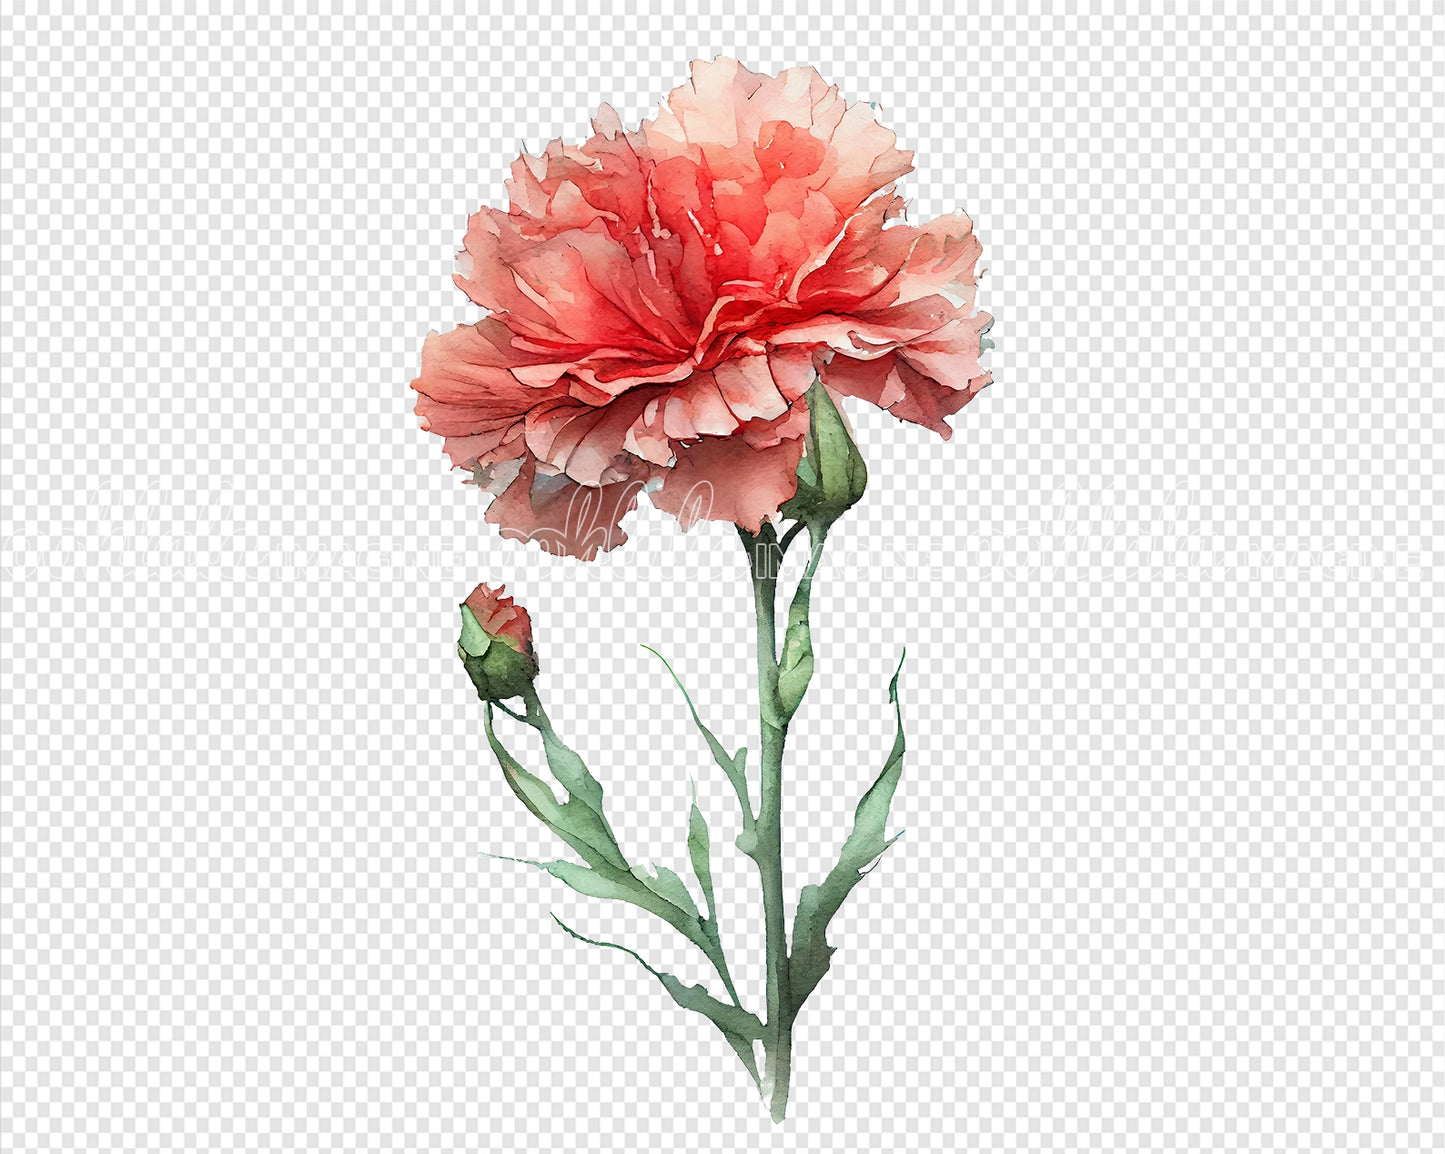 Carnation Flower Digital Watercolor PNG x 10